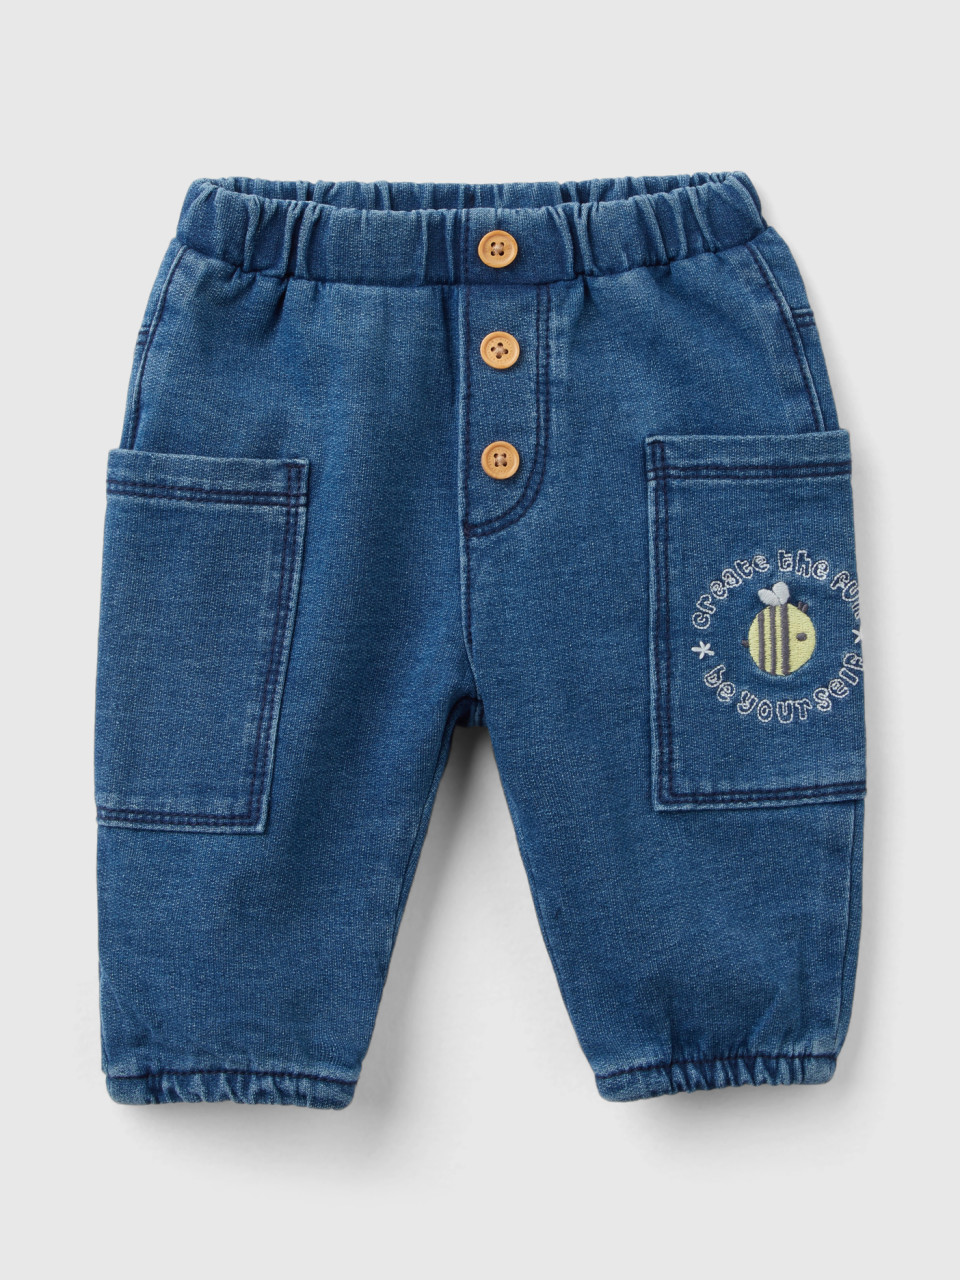 Benetton, Denim Look Sweatpants With Pockets, Blue, Kids